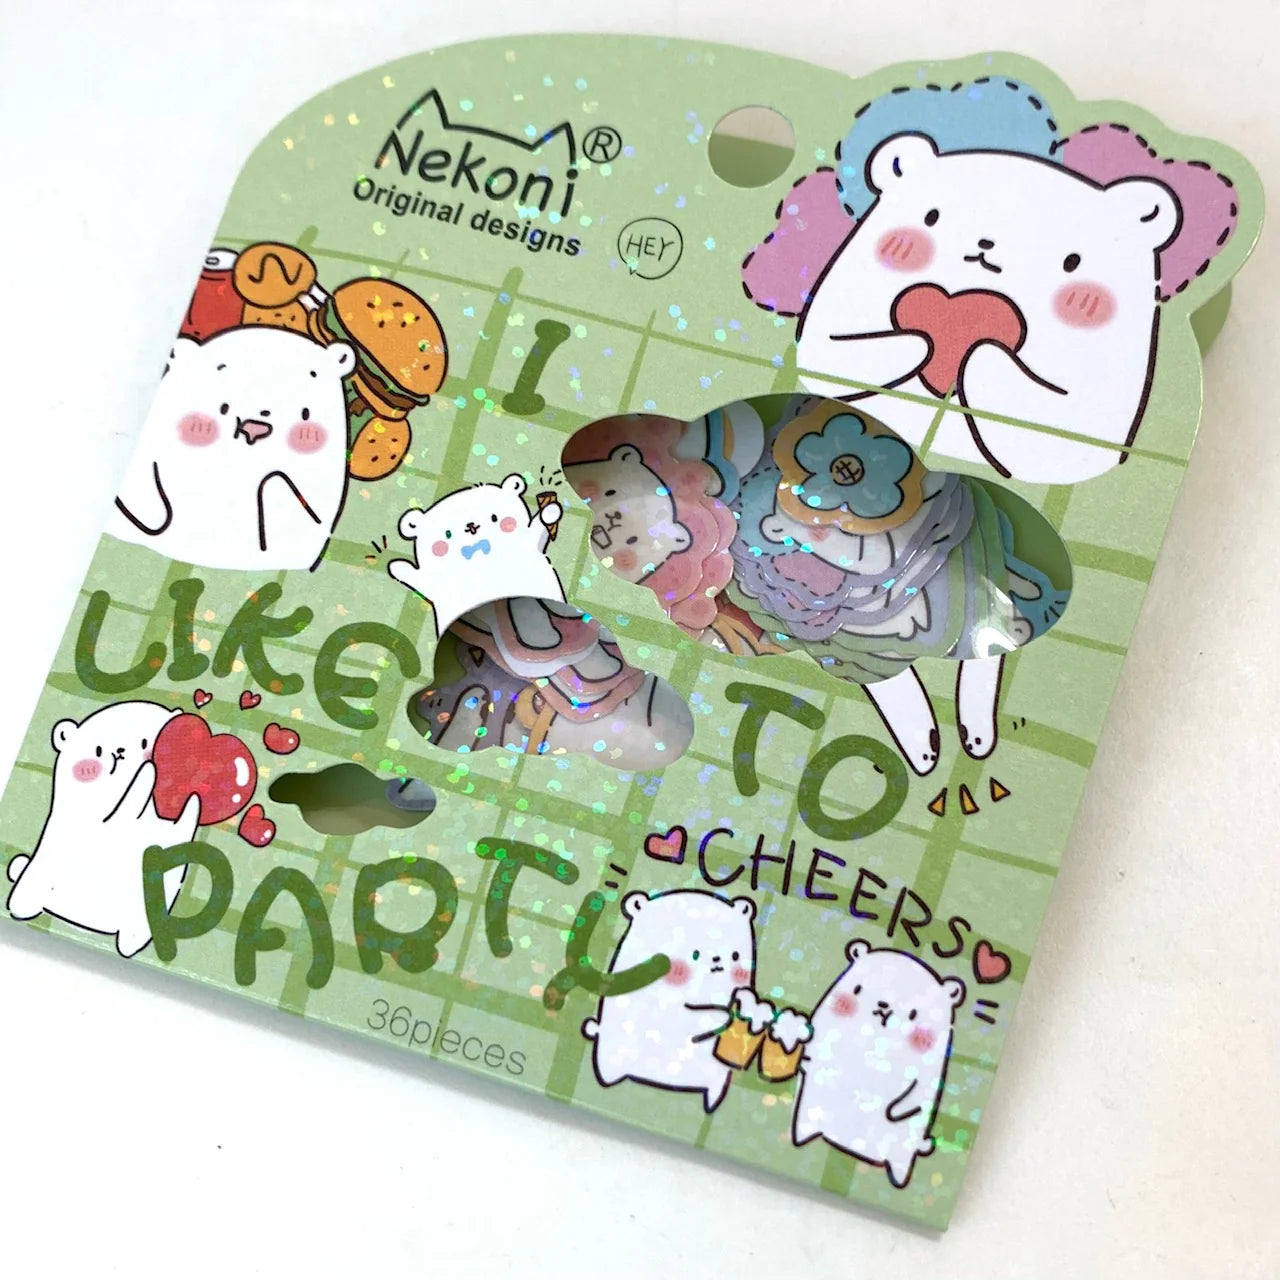 Nekoni Party Bear Sticker Bag (50546)